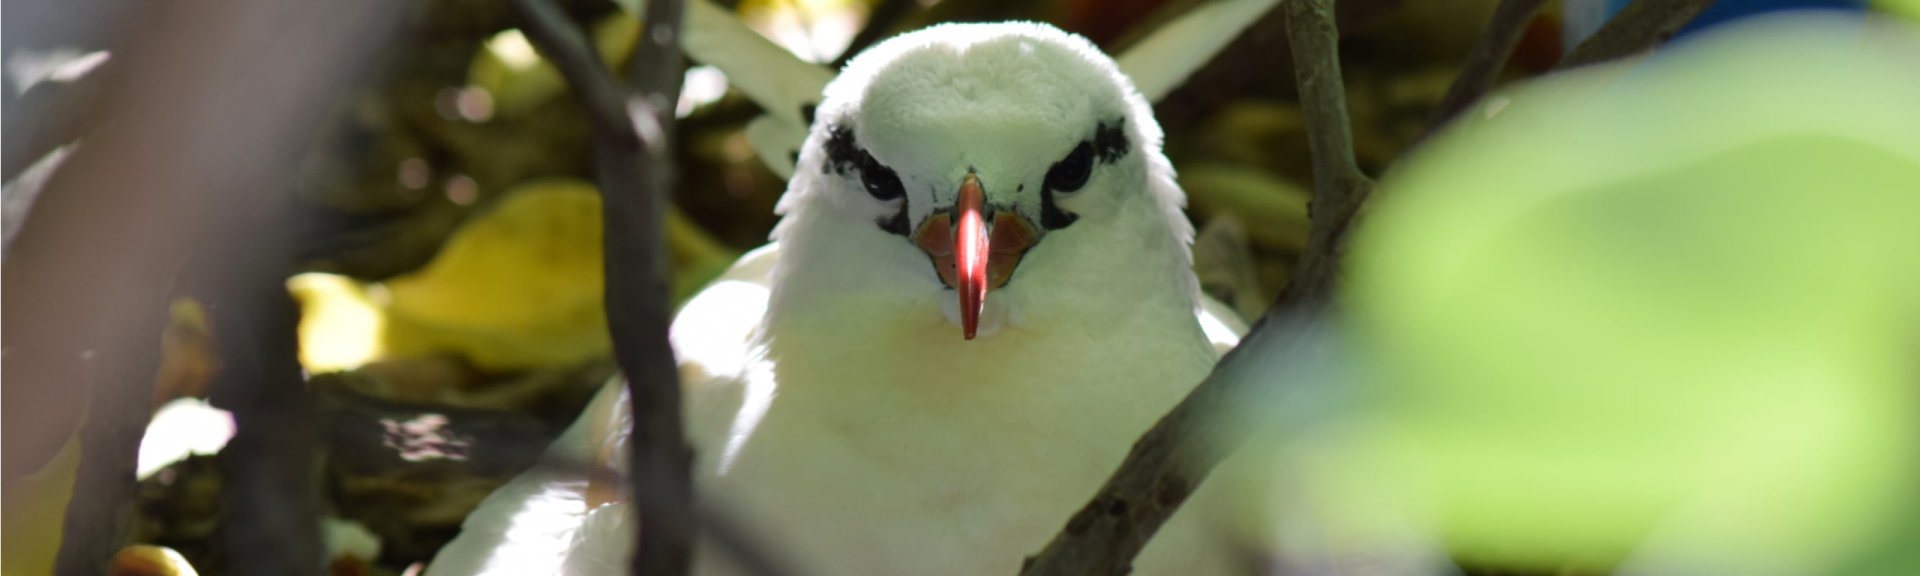 White tailed tropicbird, credit parks australia.